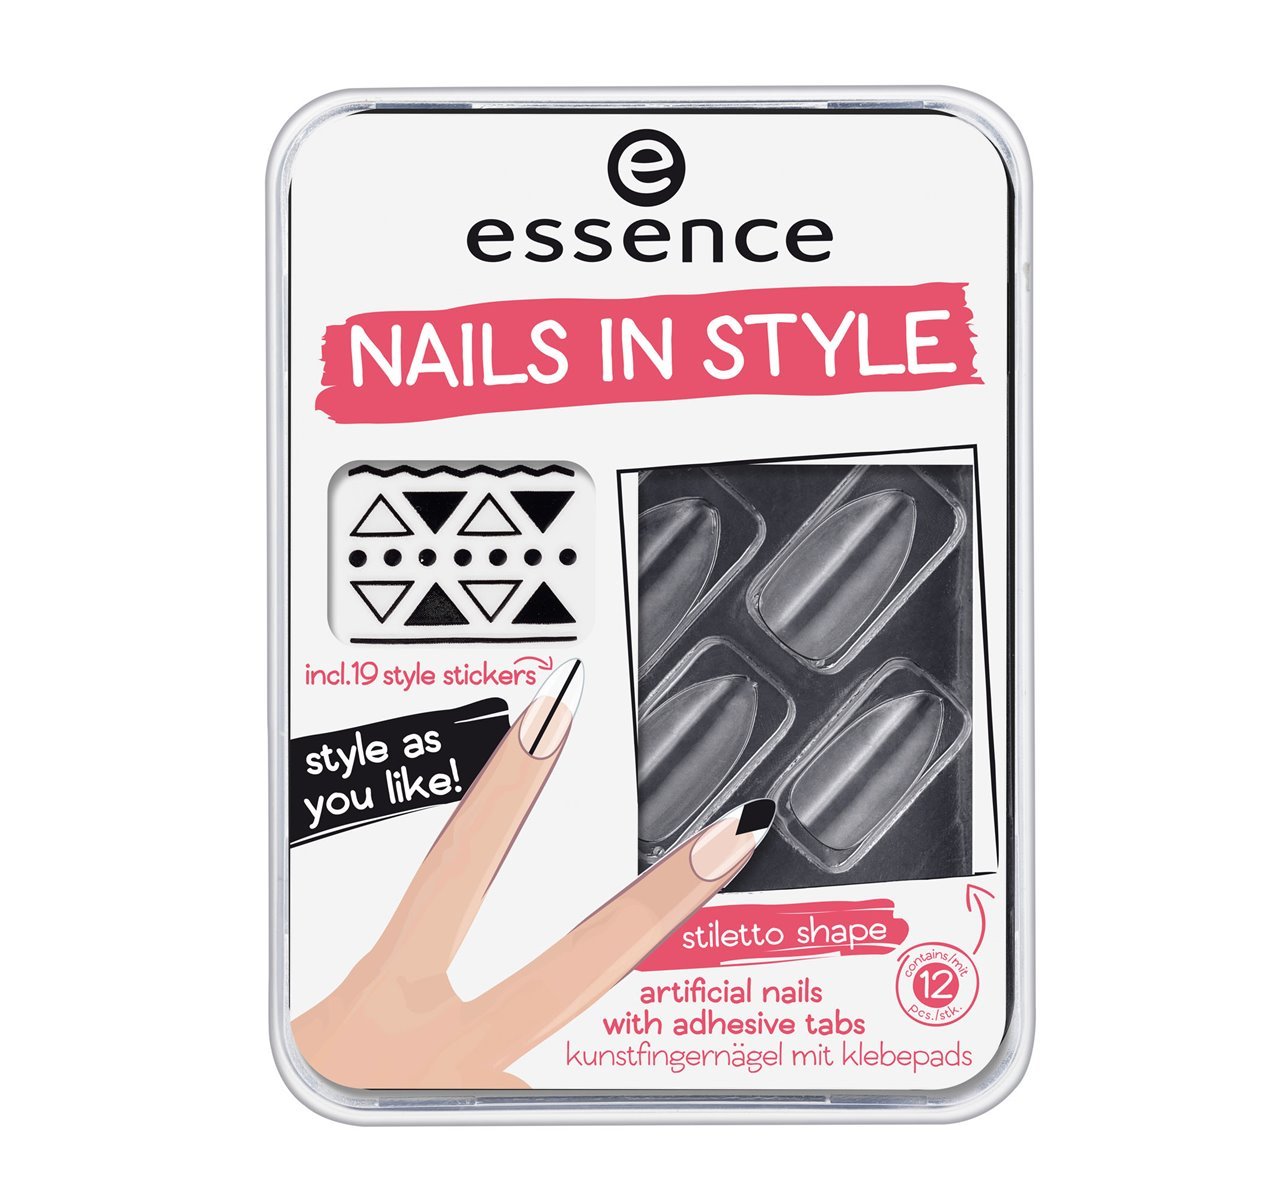 essence nails in style 04 - เอสเซนส์เนลส์อินสไตล์ 04